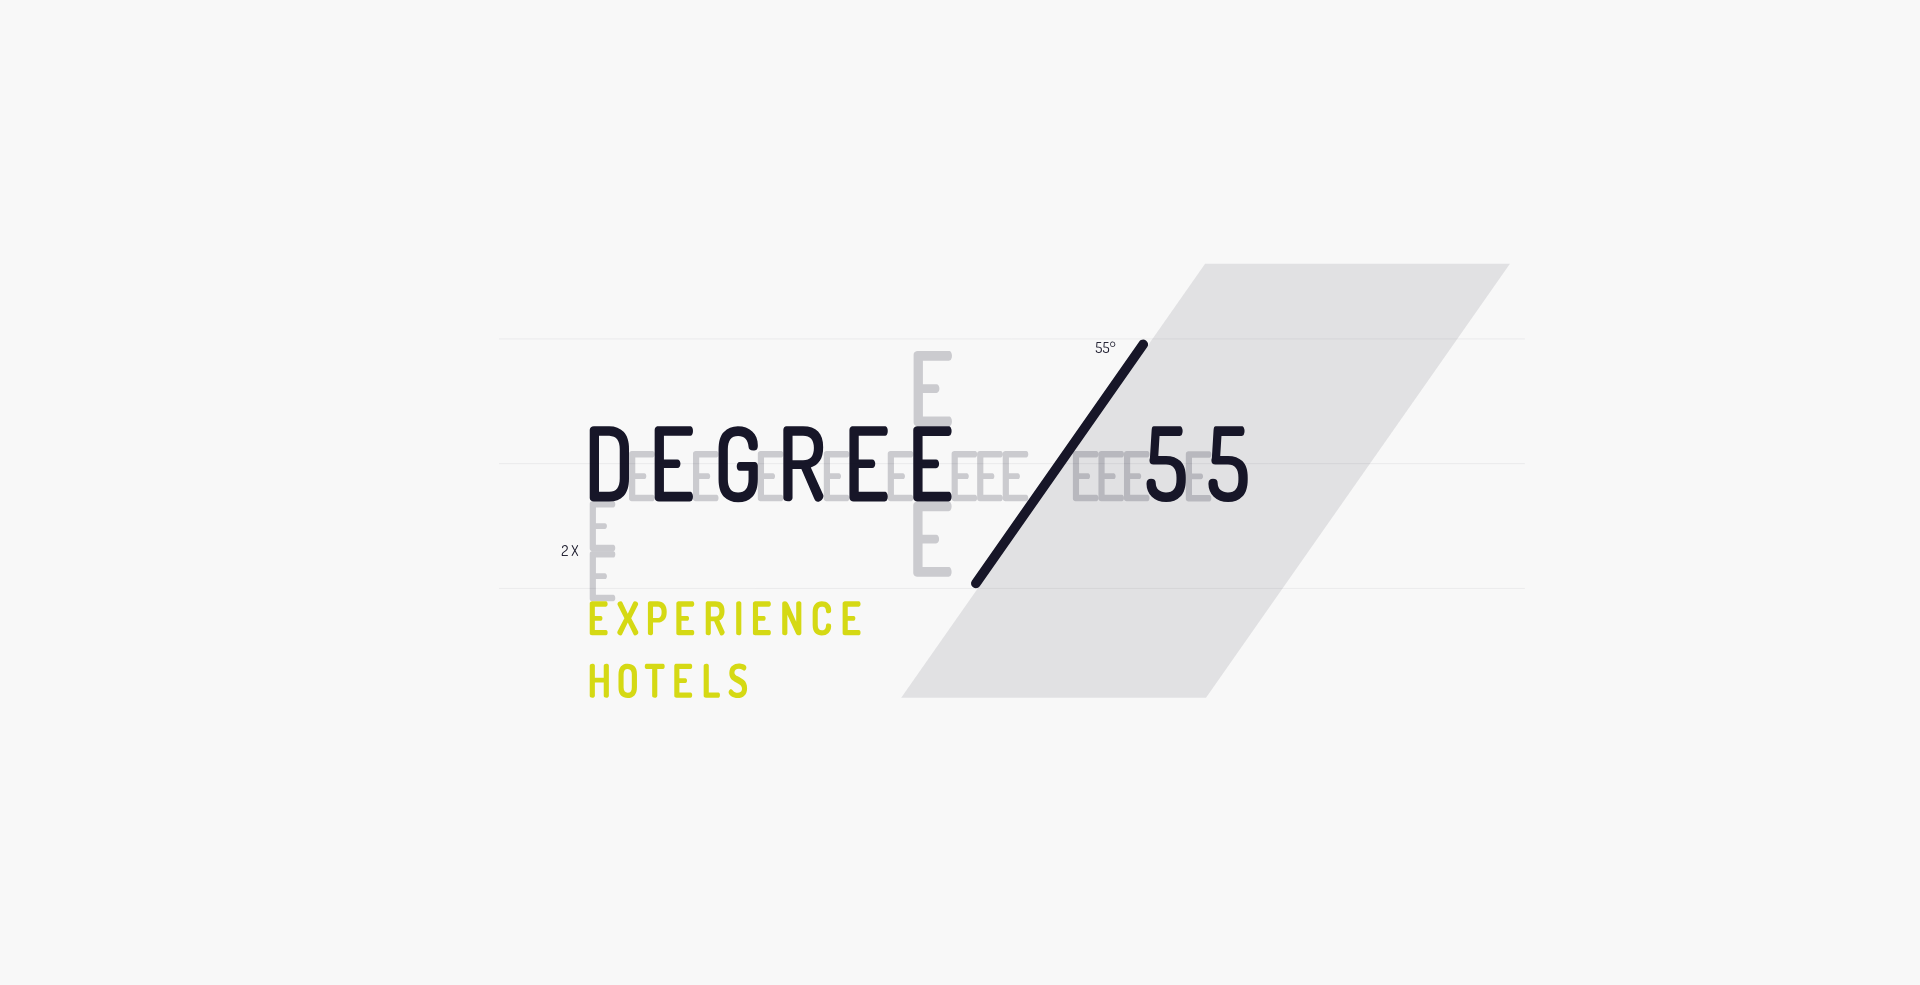 Sanmiguel degree55 hotel corporate identity – 3